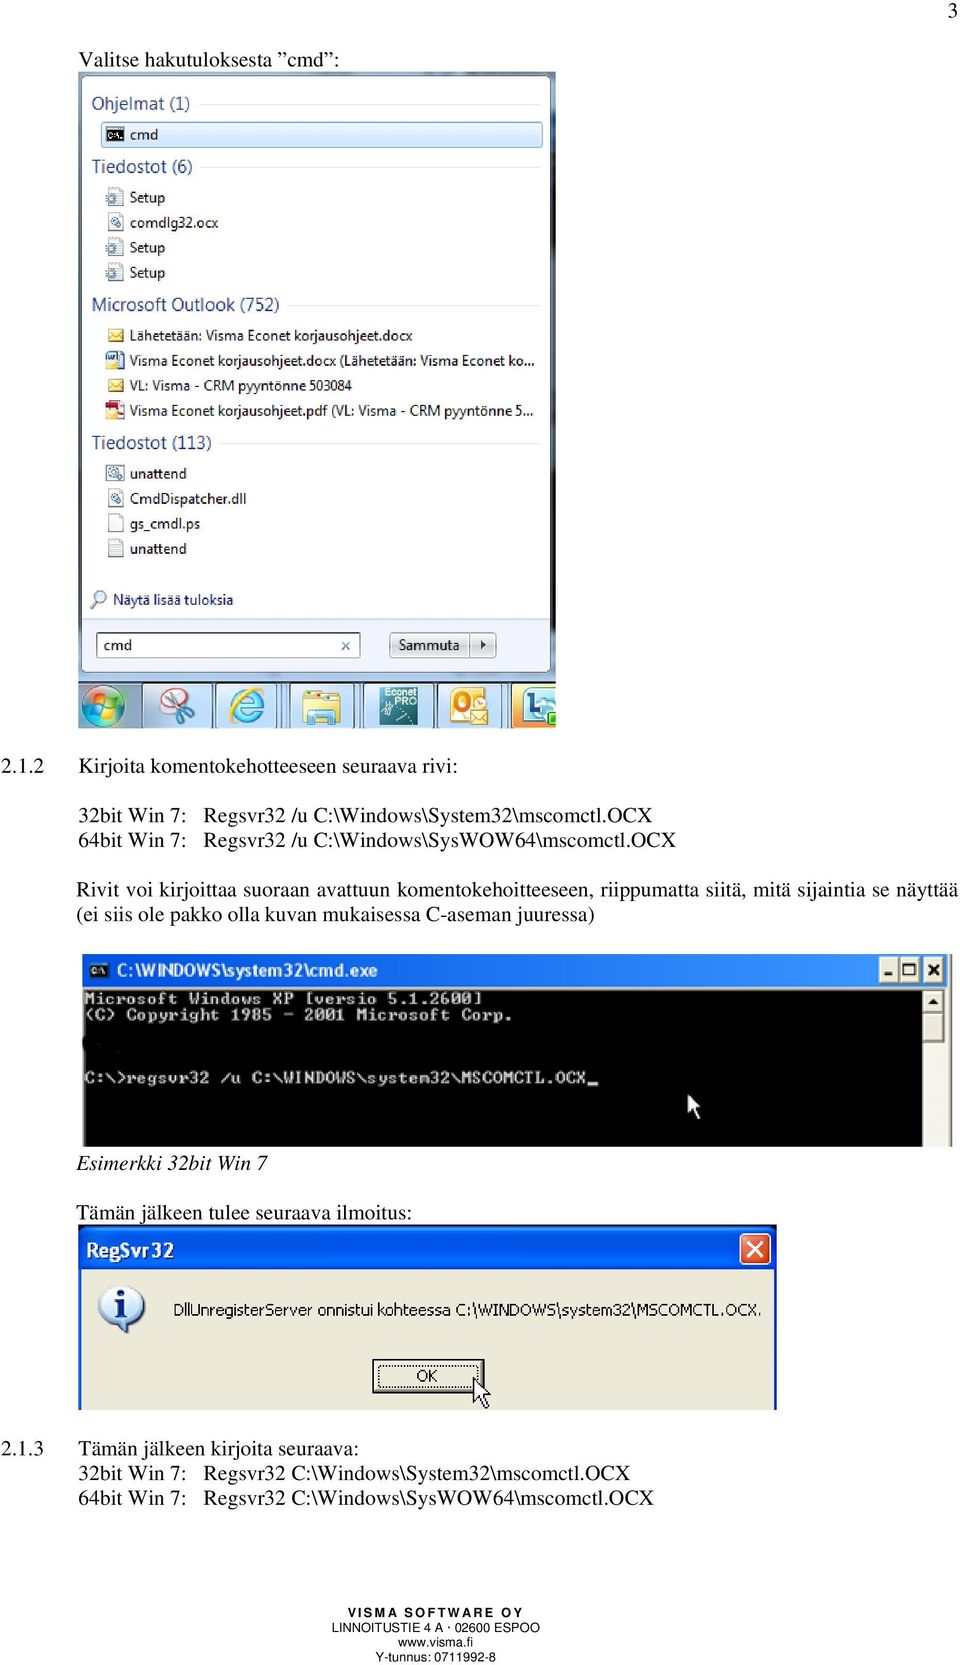 OCX 64bit Win 7: Regsvr32 /u C:\Windows\SysWOW64\mscomctl.